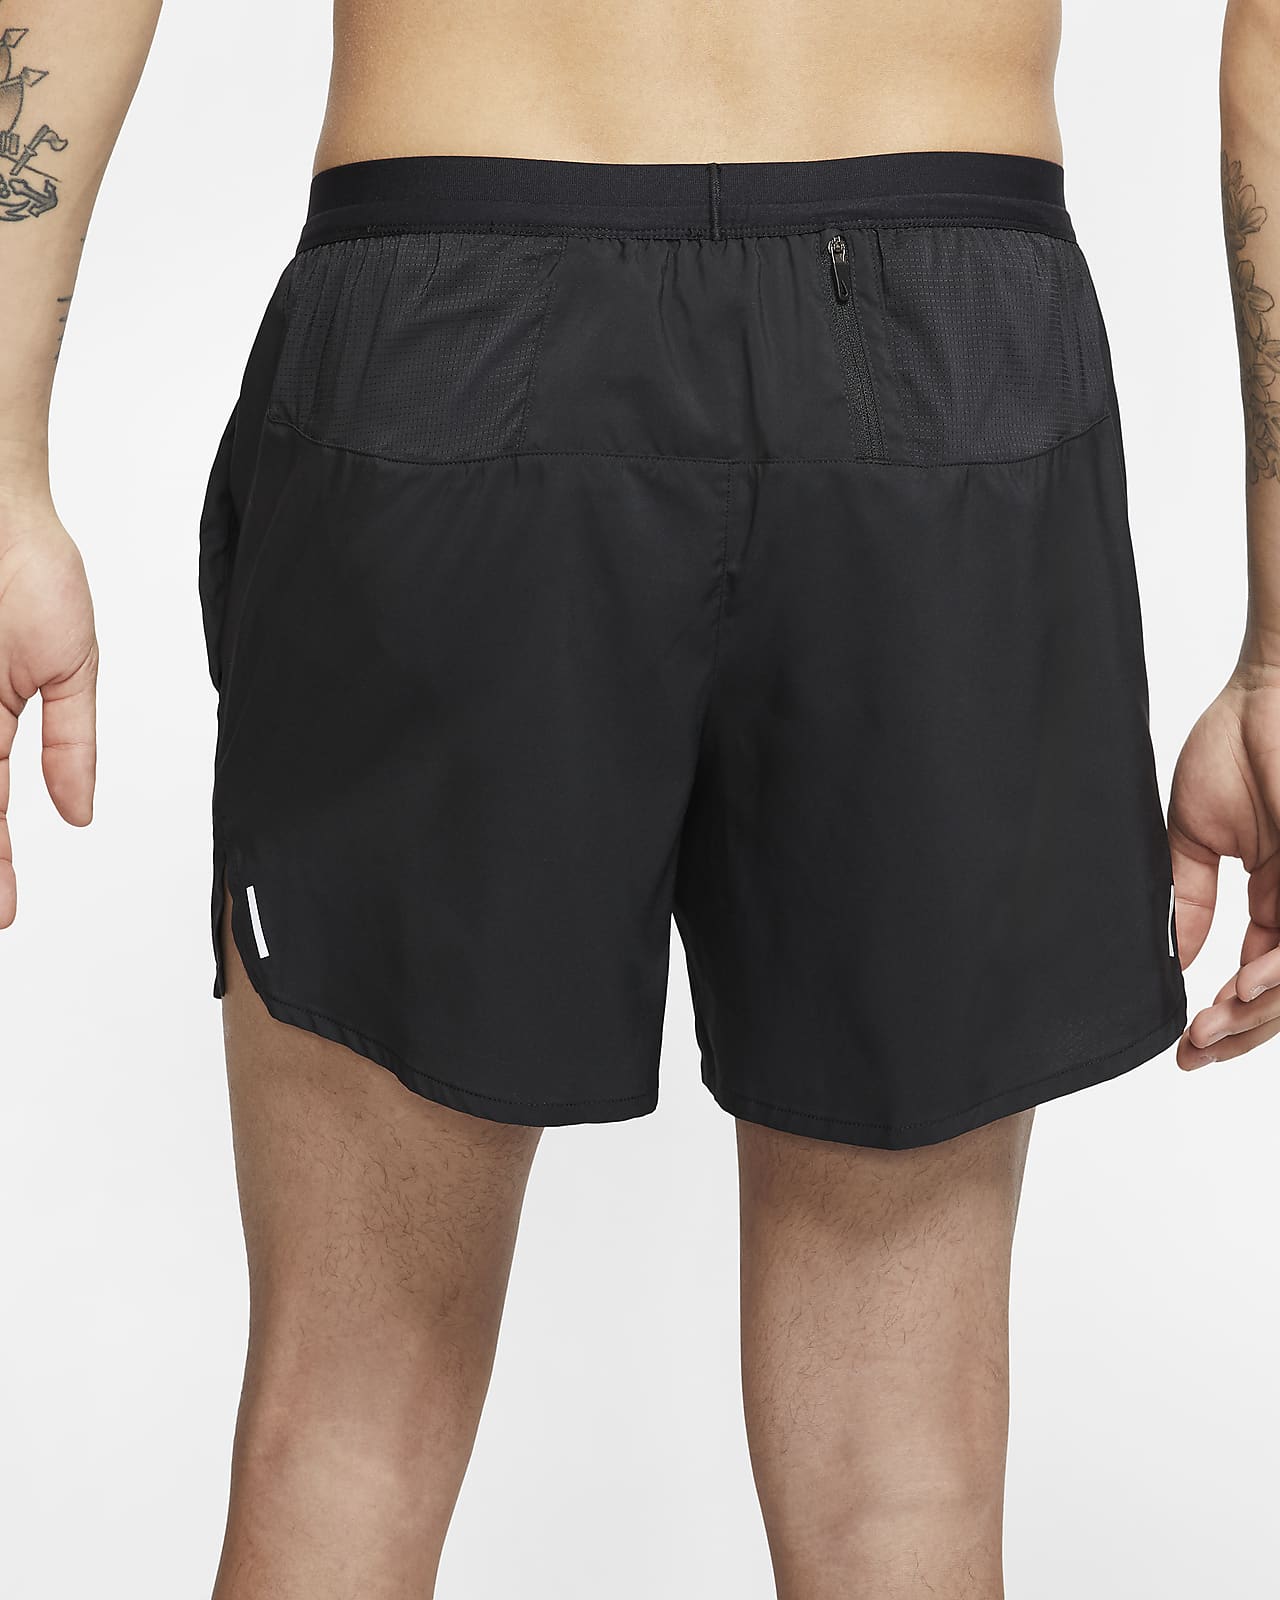 nike men's shorts 5 inch